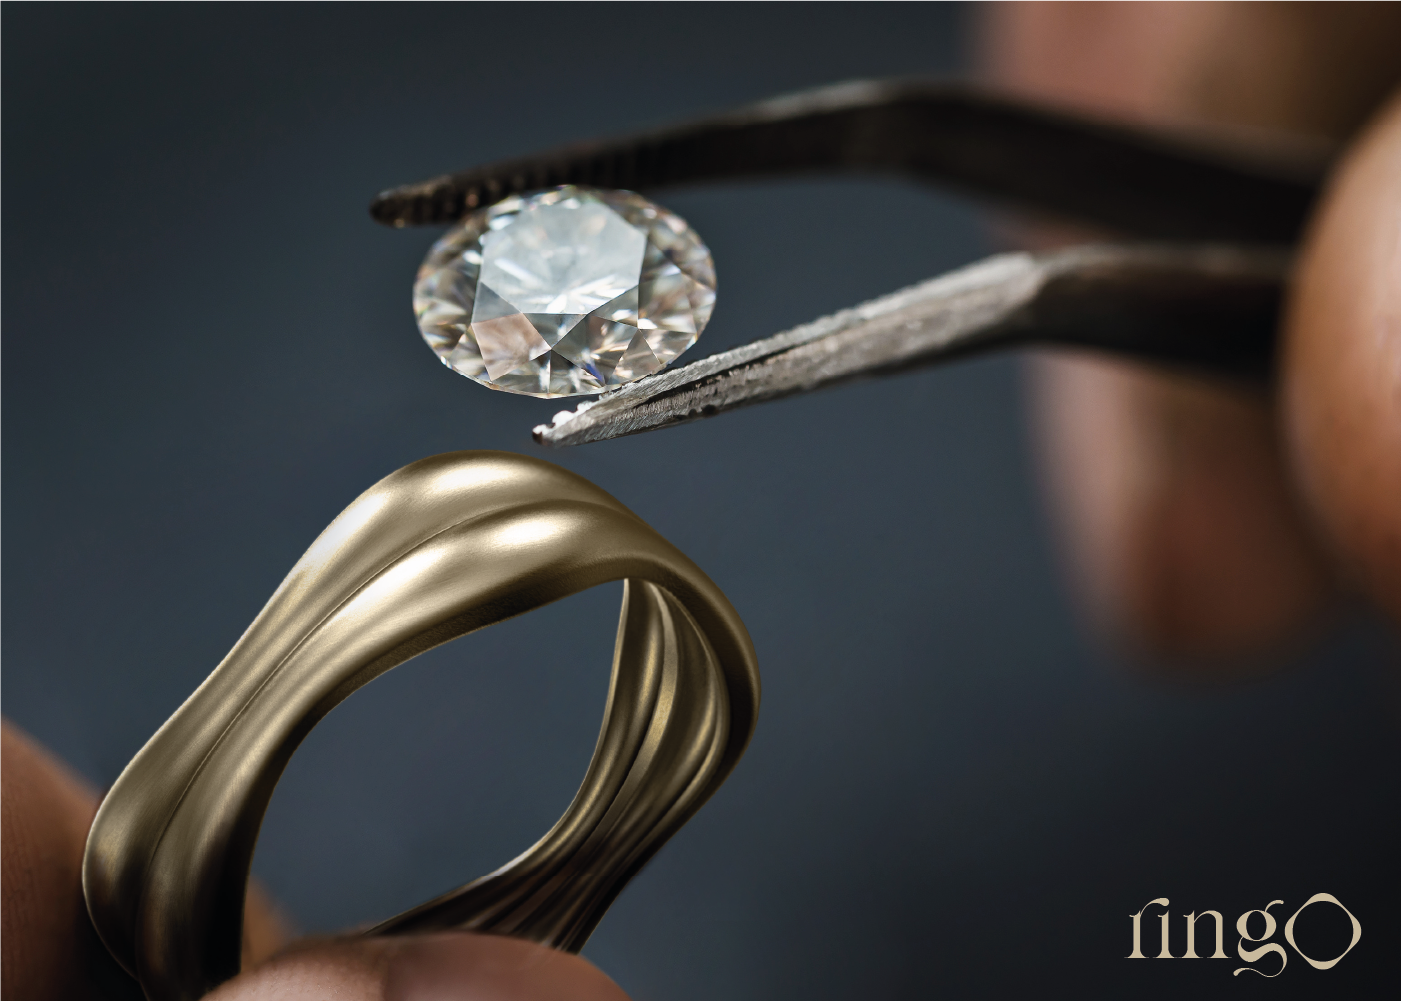 Ring0 Jewelry Design